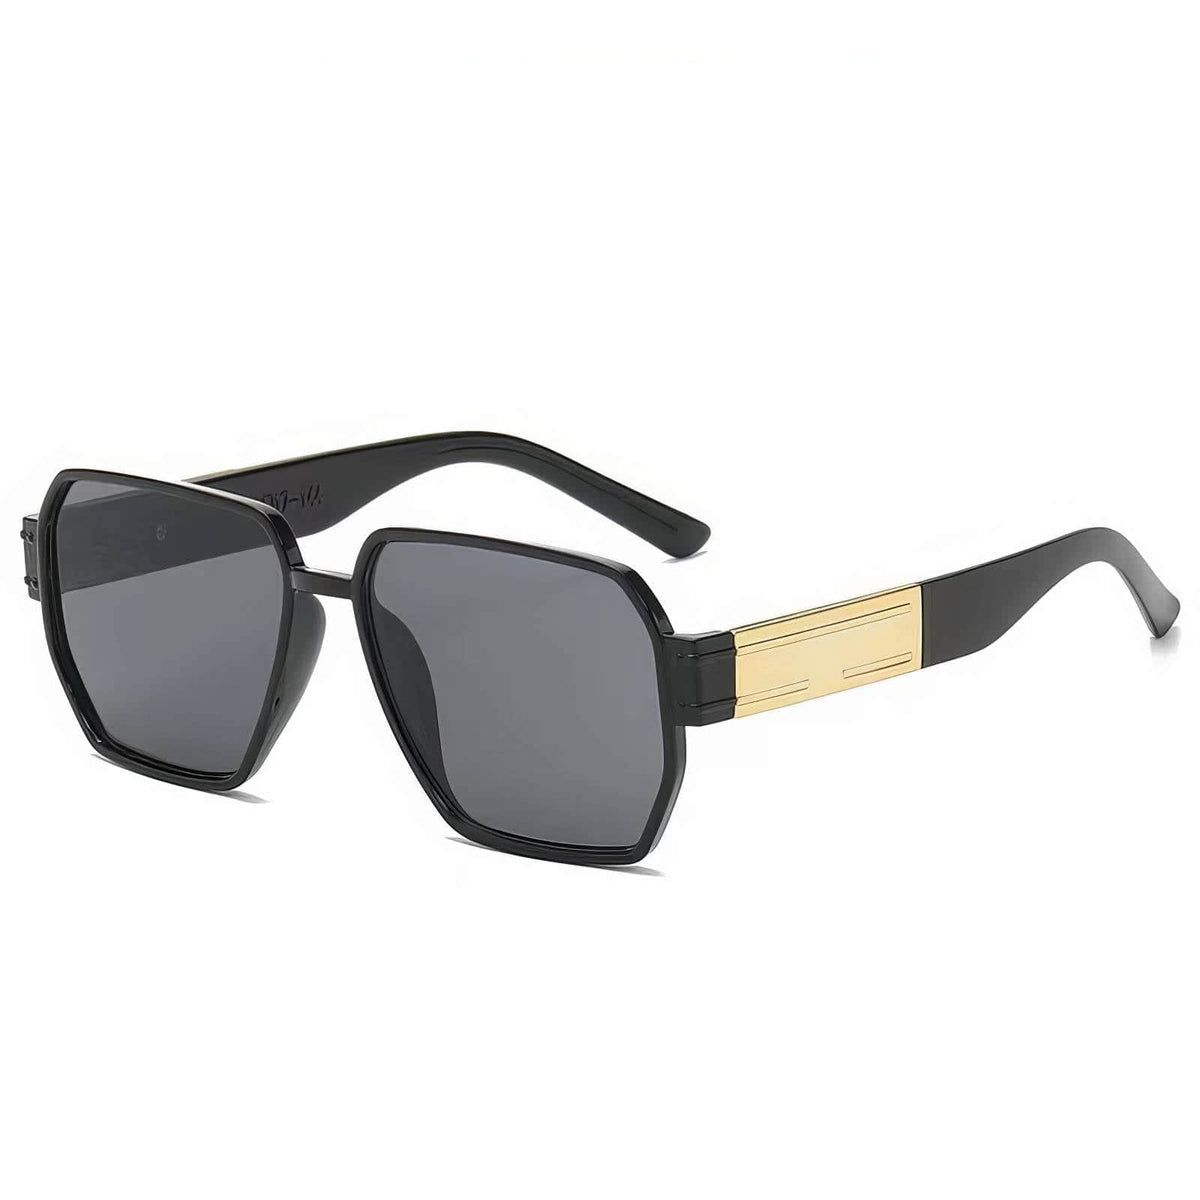 Simple Square Oversized Sunglasses Black/Gray / Resin